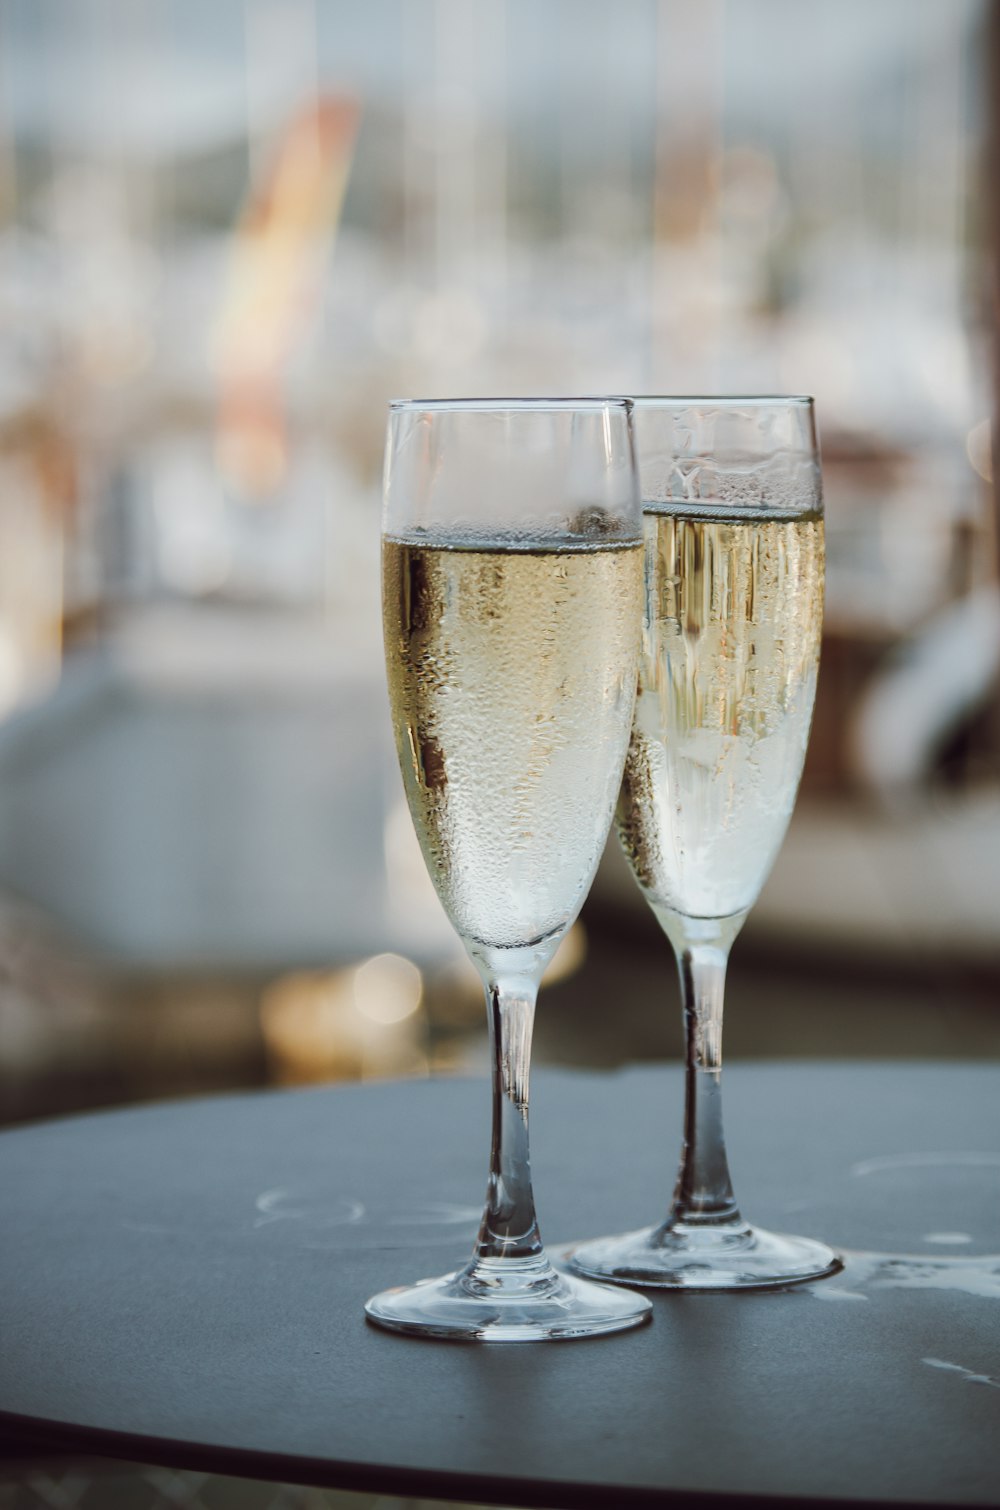 two champagne glasses photo – Free Ibiza Image on Unsplash